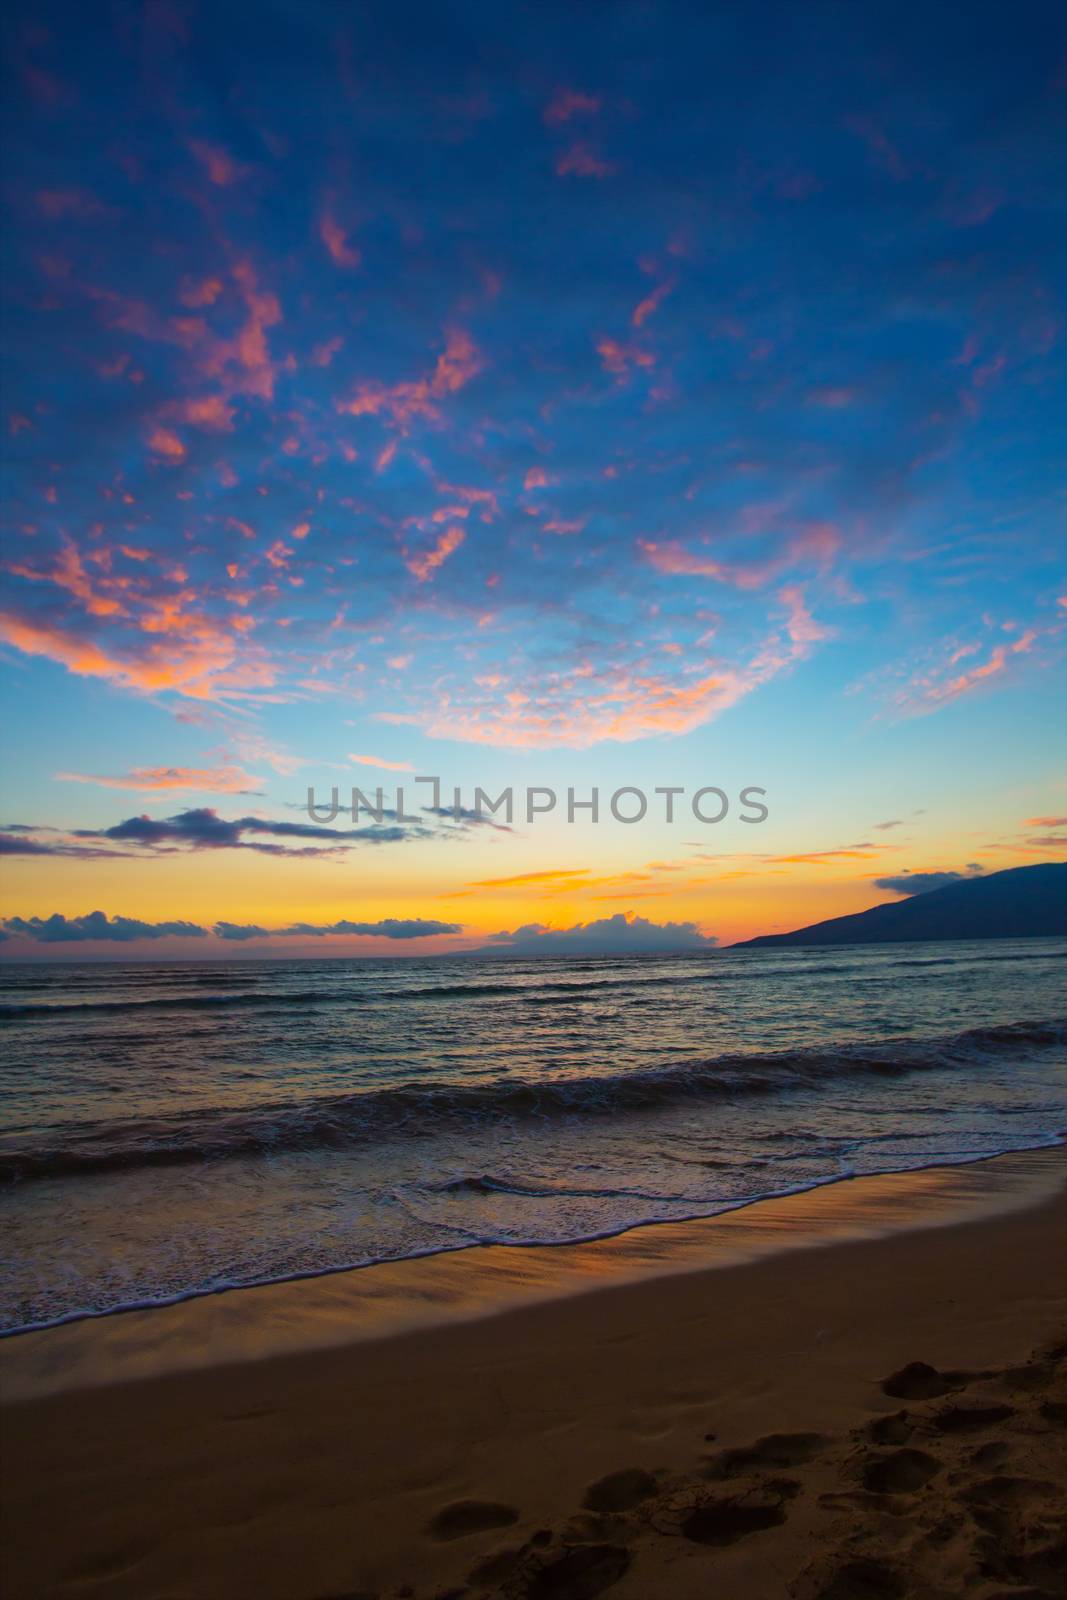 Kihei Sunset and Beach Footprints by Creatista